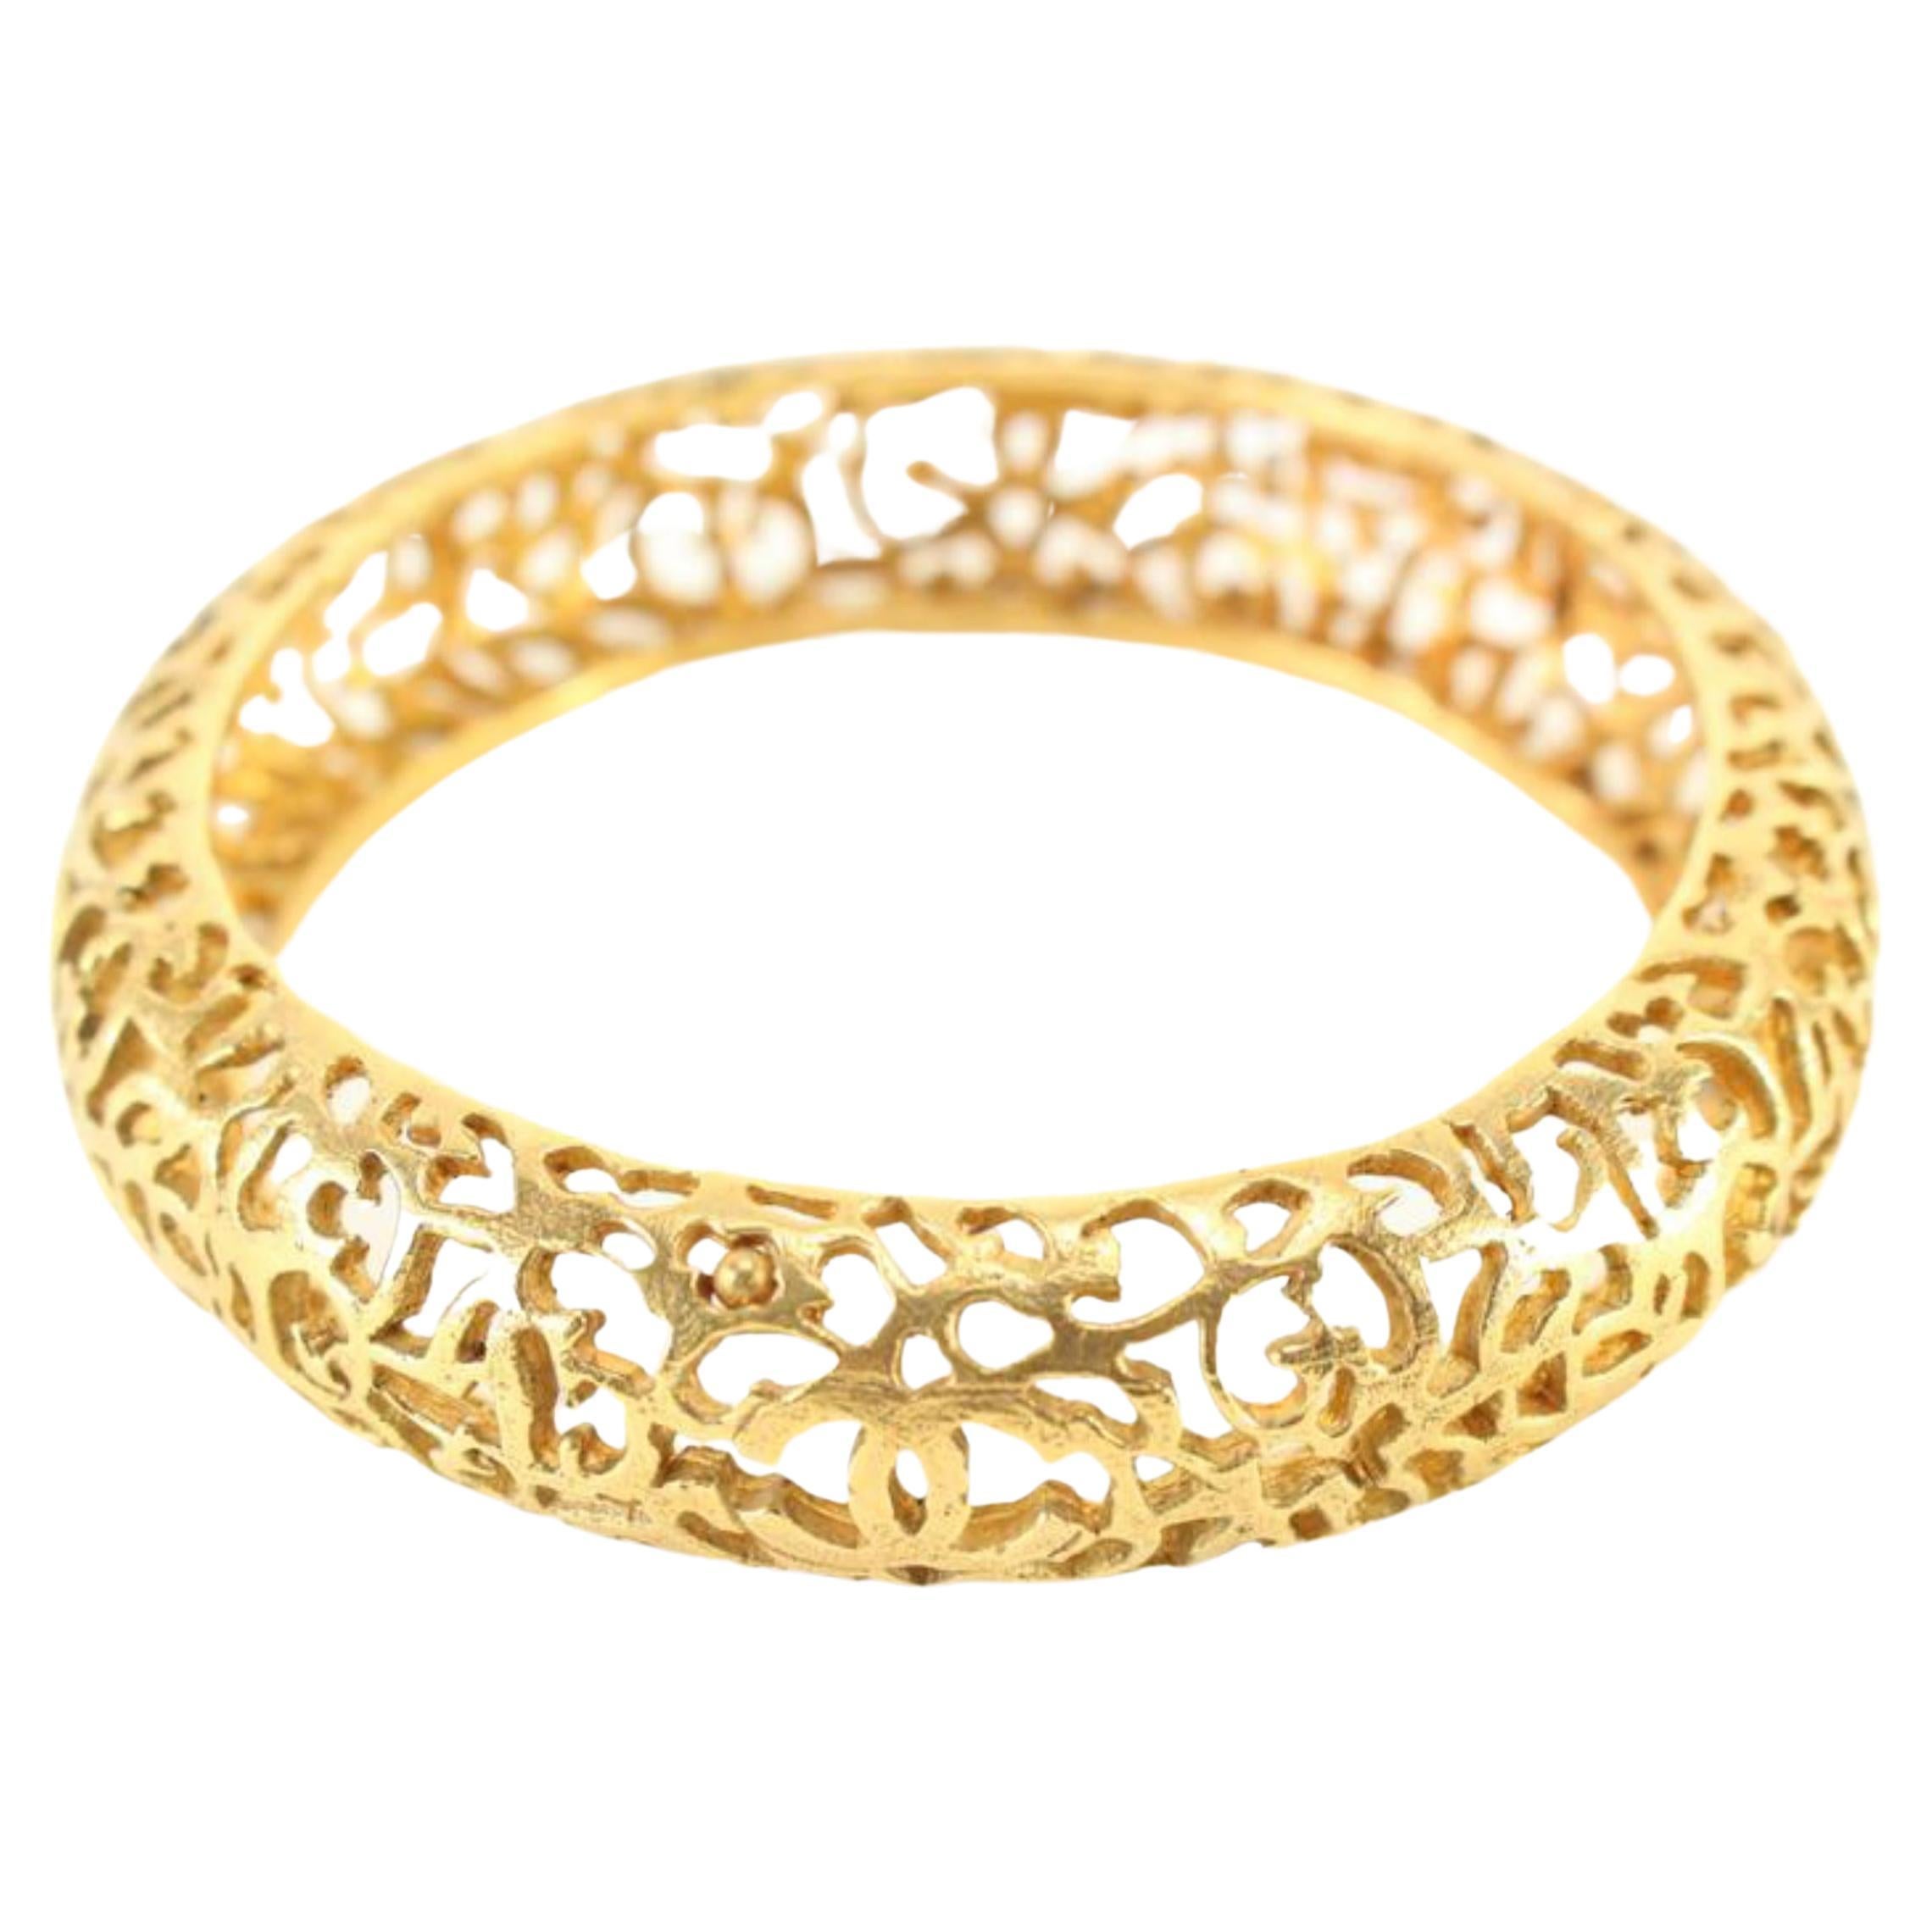 Chanel 24k Gold Plated Collection 25 CC Logo Bangle Bracelet 80ck817s For Sale